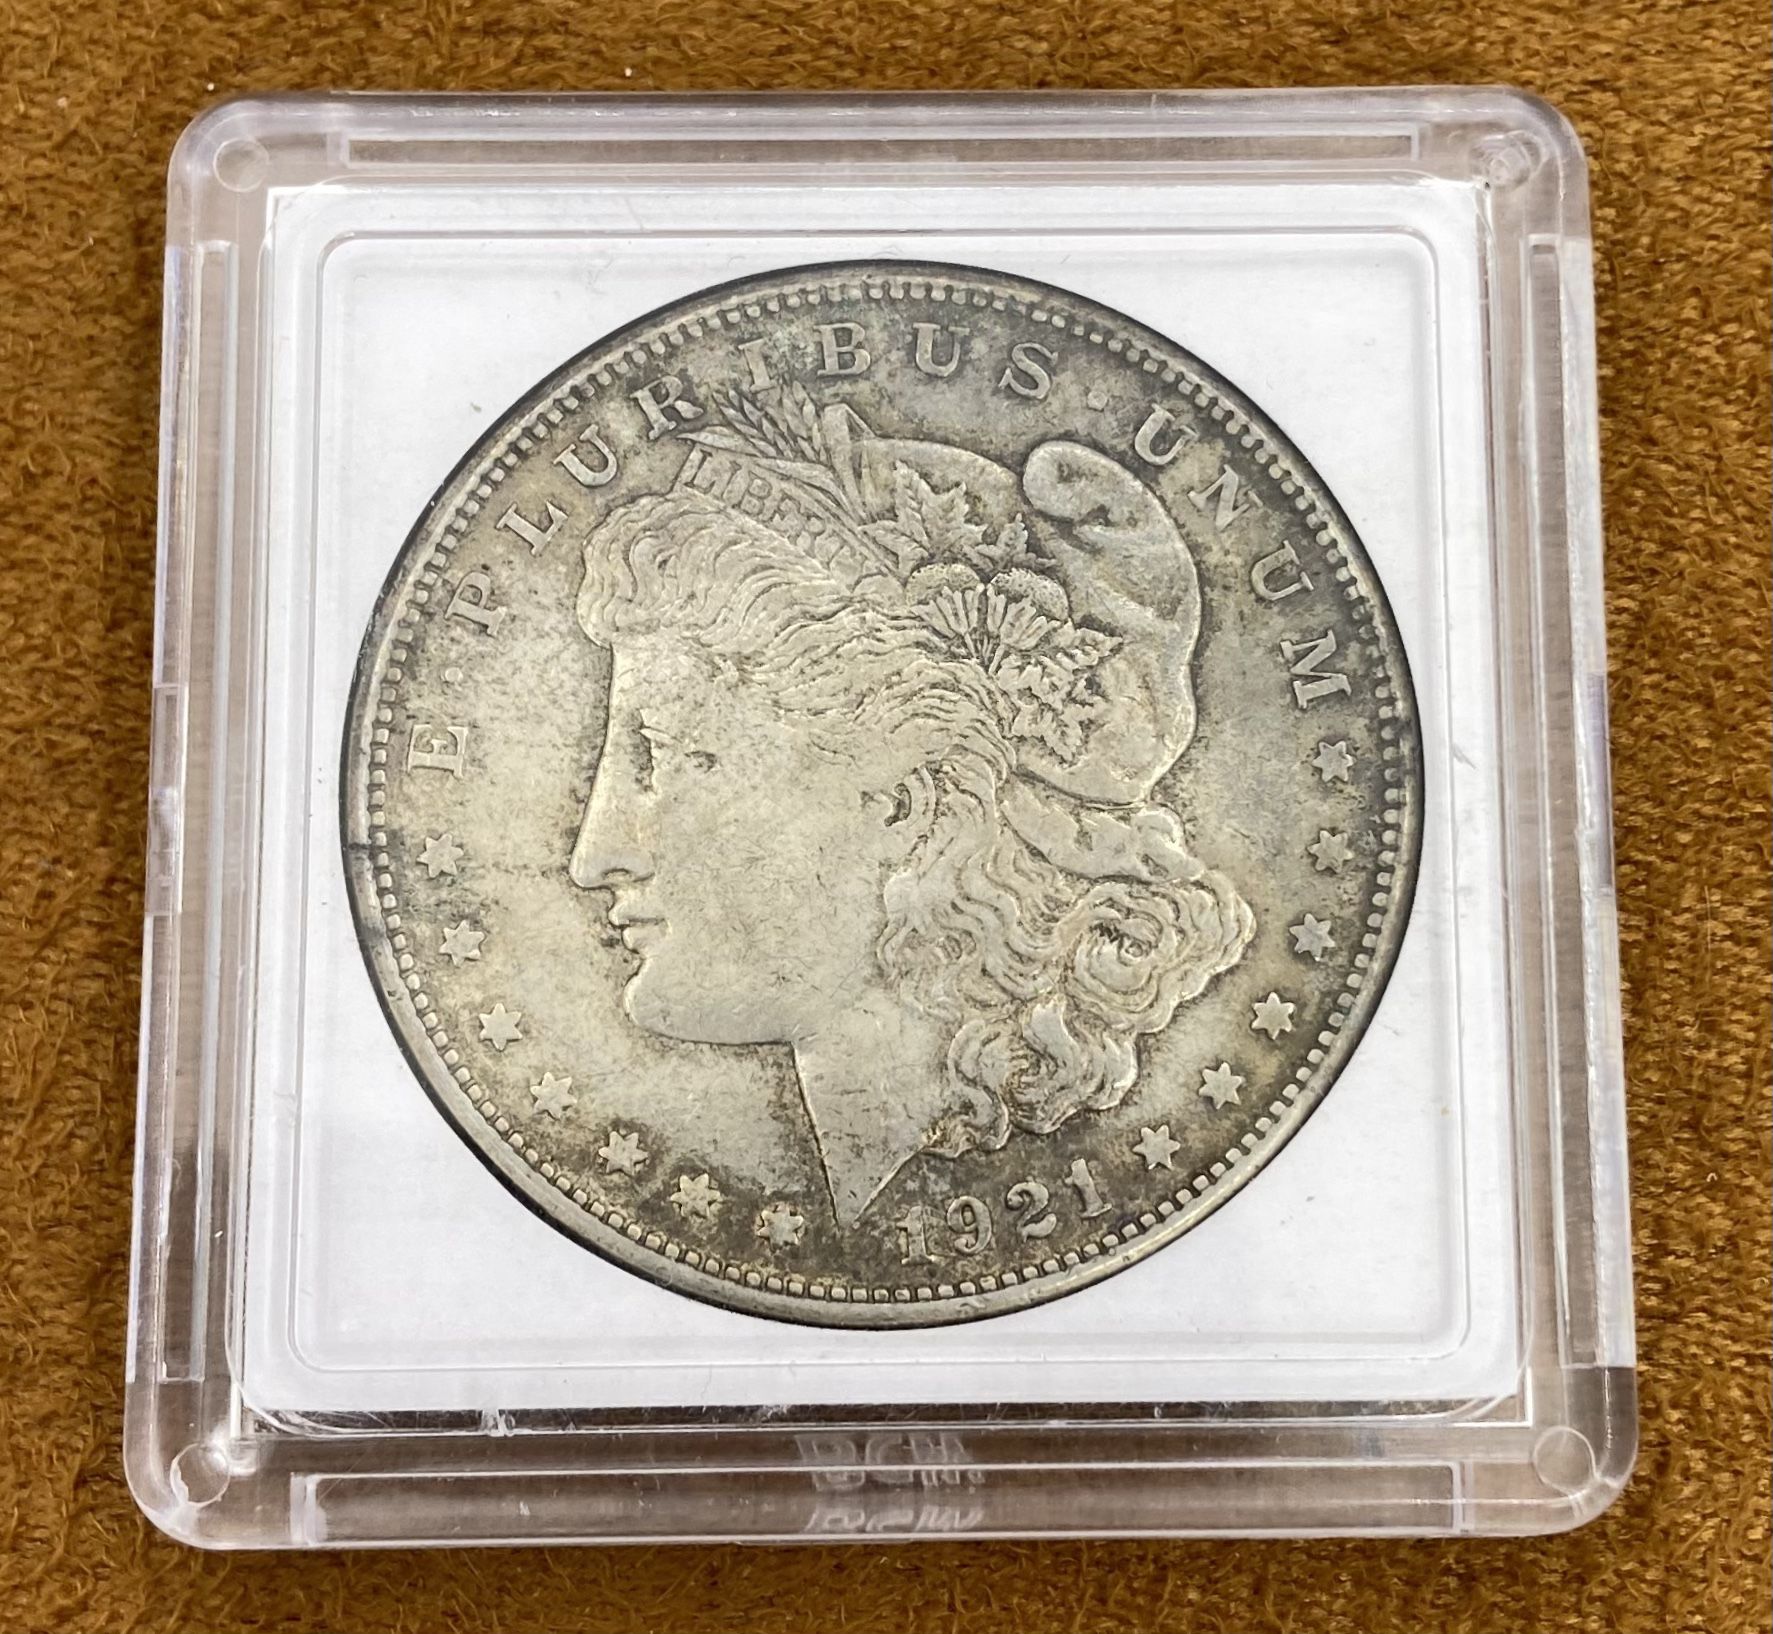 1921 S Silver Morgan Dollar